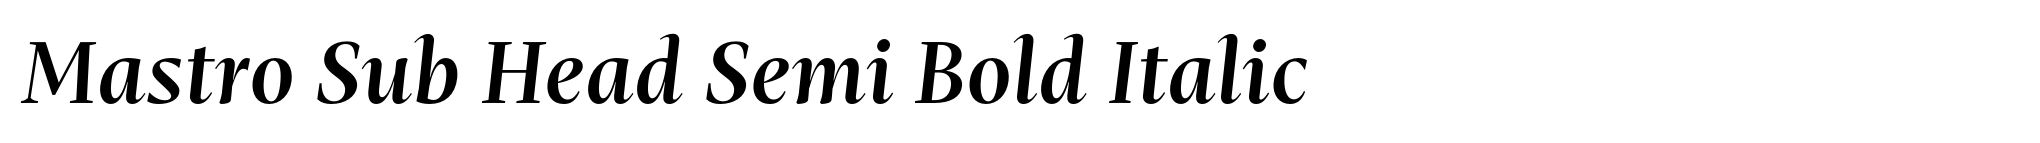 Mastro Sub Head Semi Bold Italic image